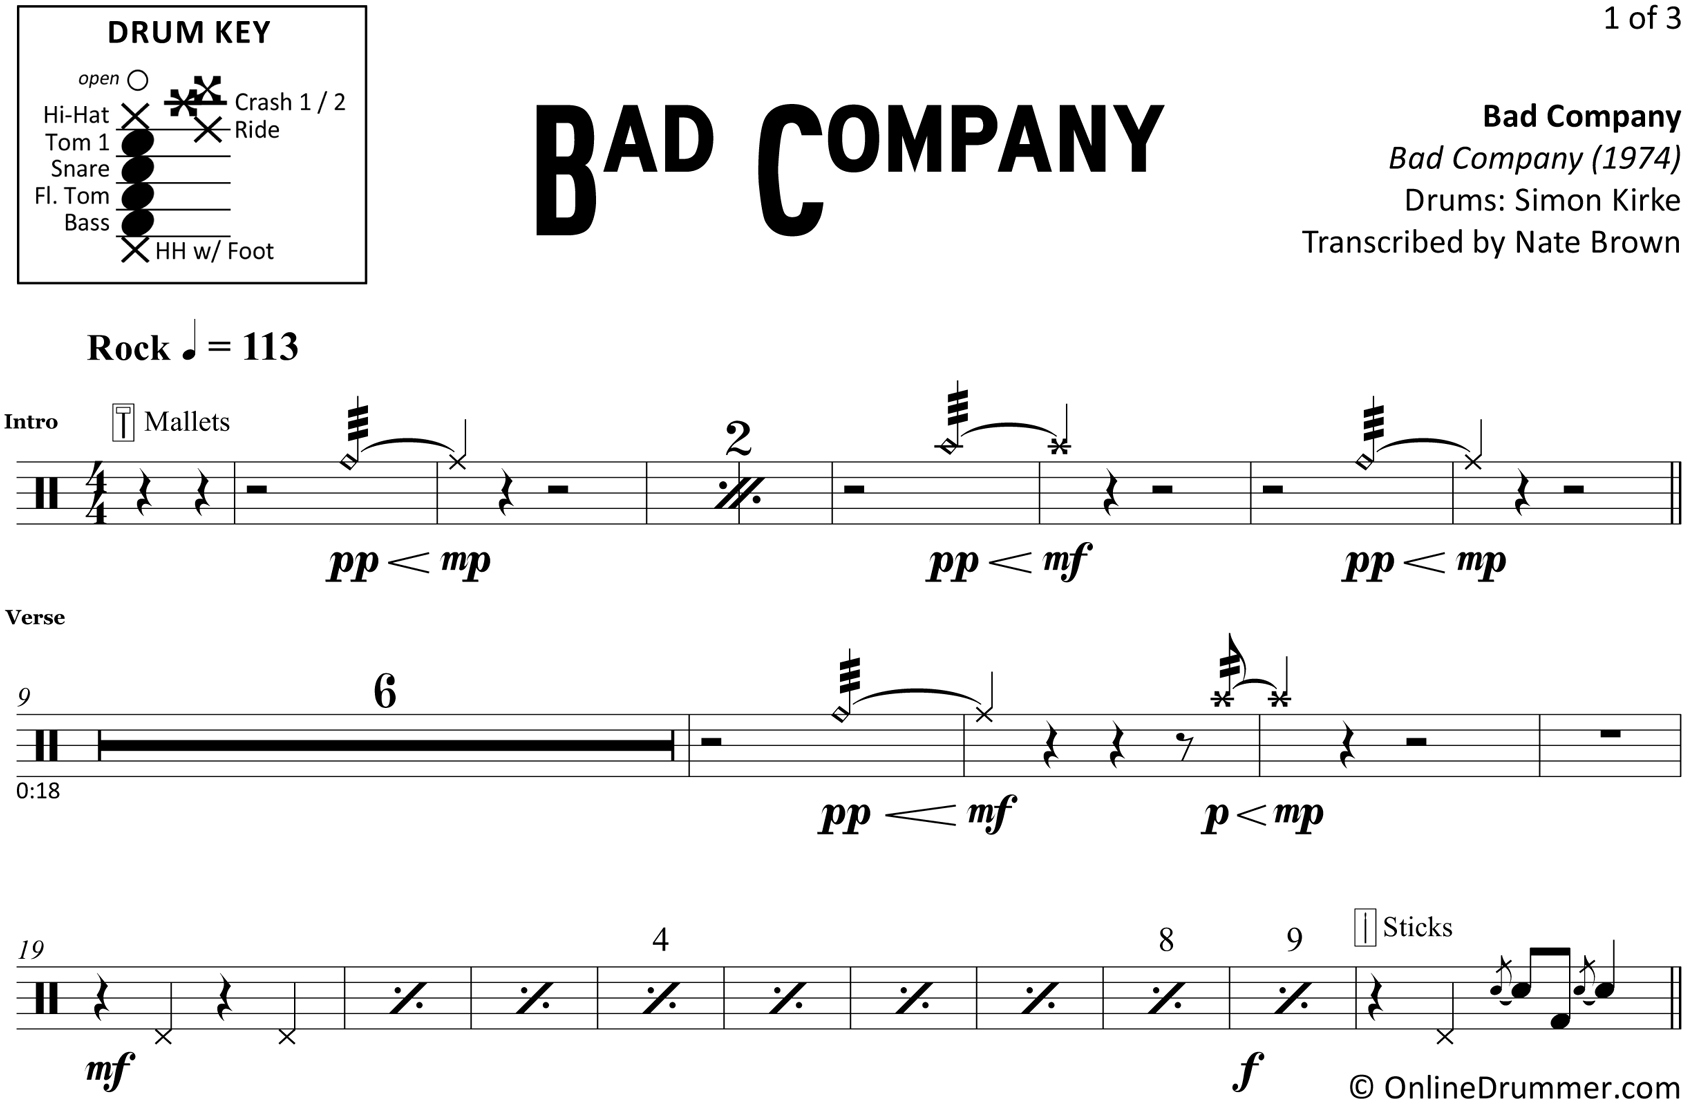 Bad Company - Bad Company - Drum Sheet Music